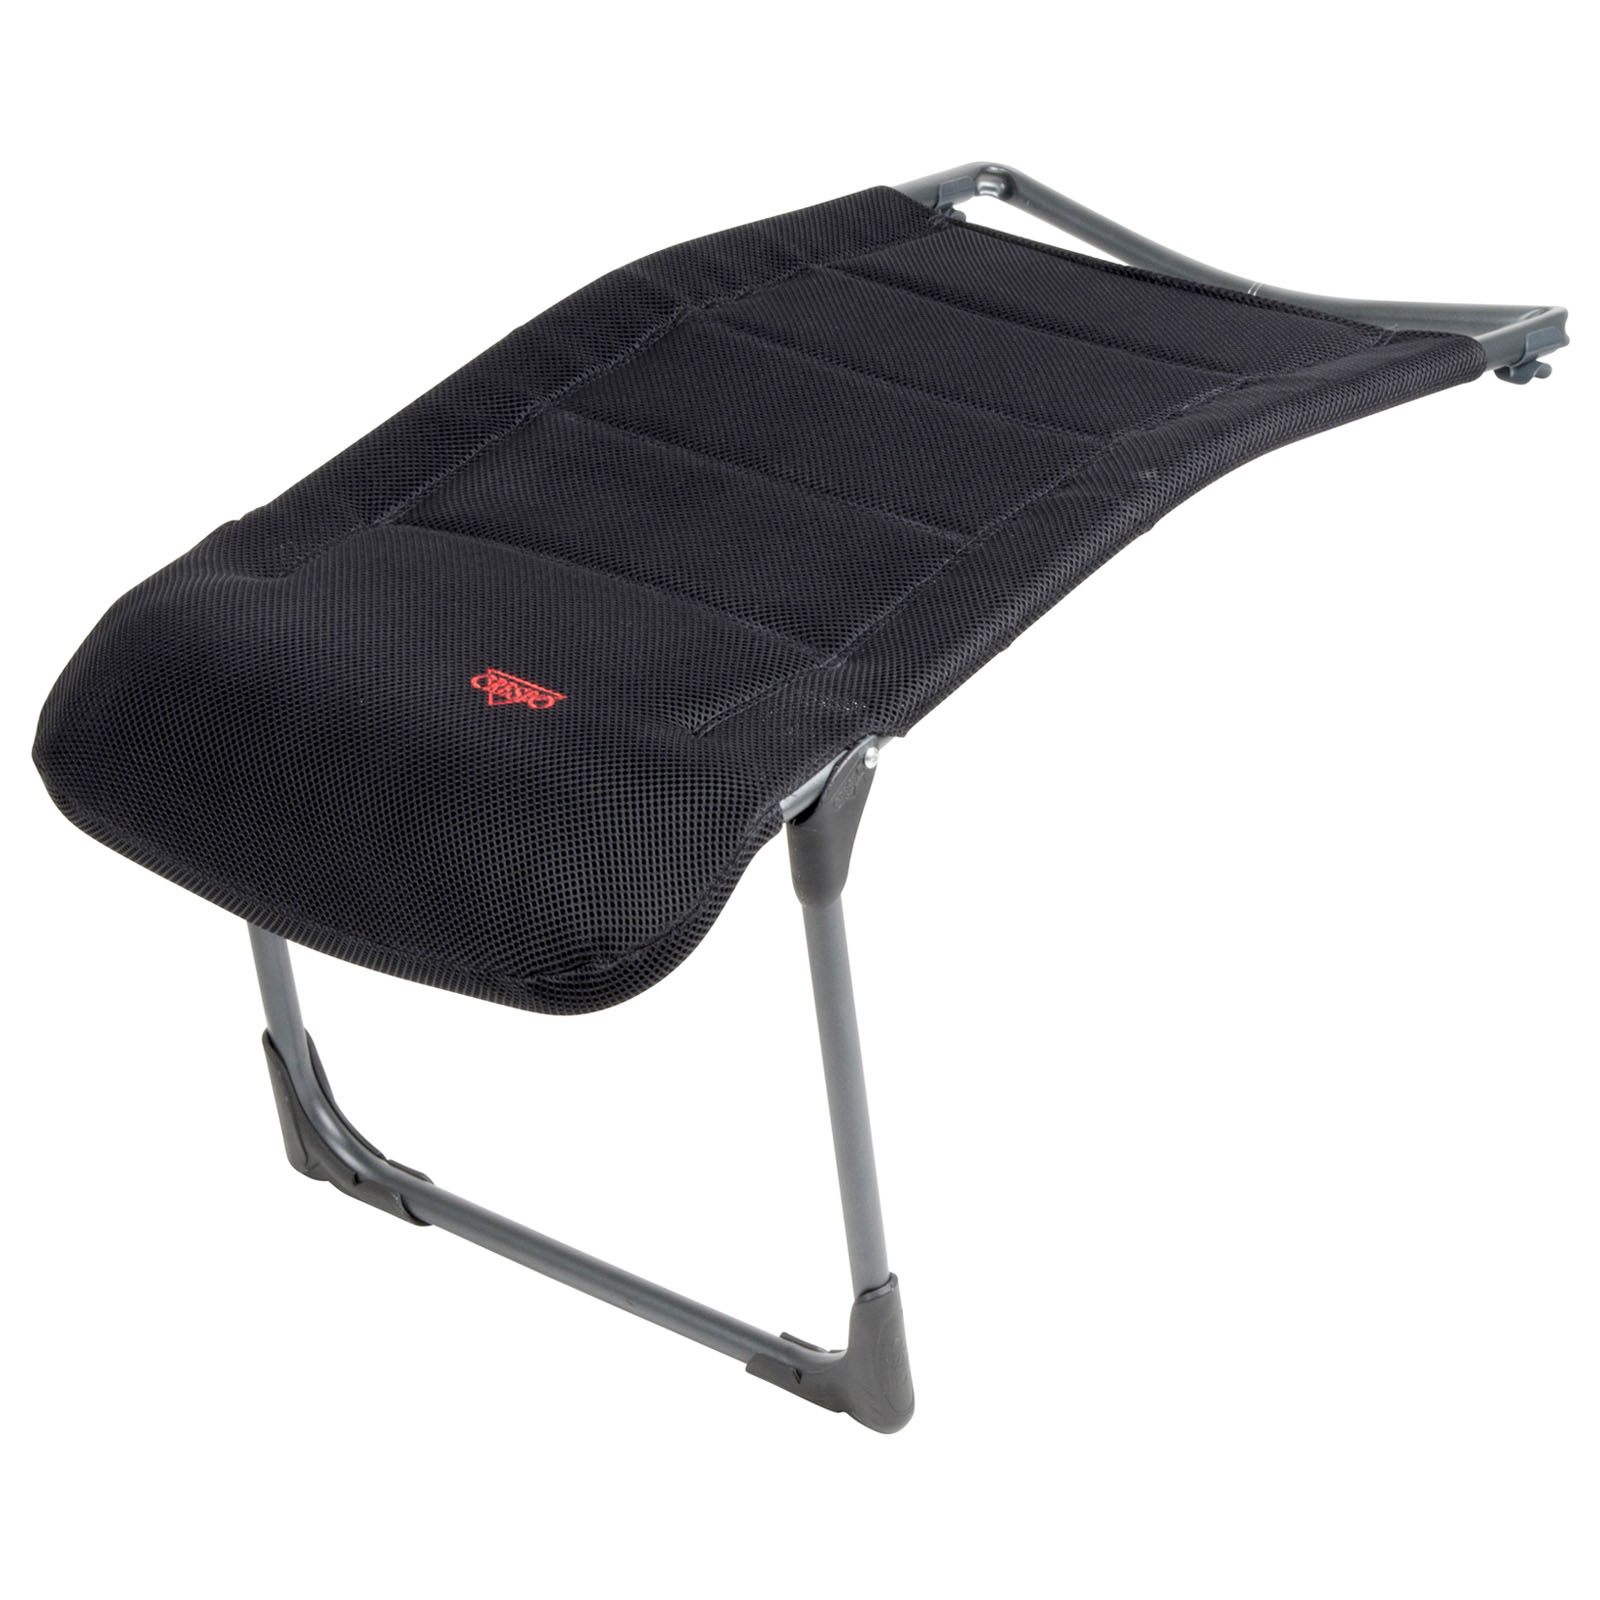 Crespo reposa pies rp215 air Deluxe asiento para los pies silla de camping silla plegable silla Alu 